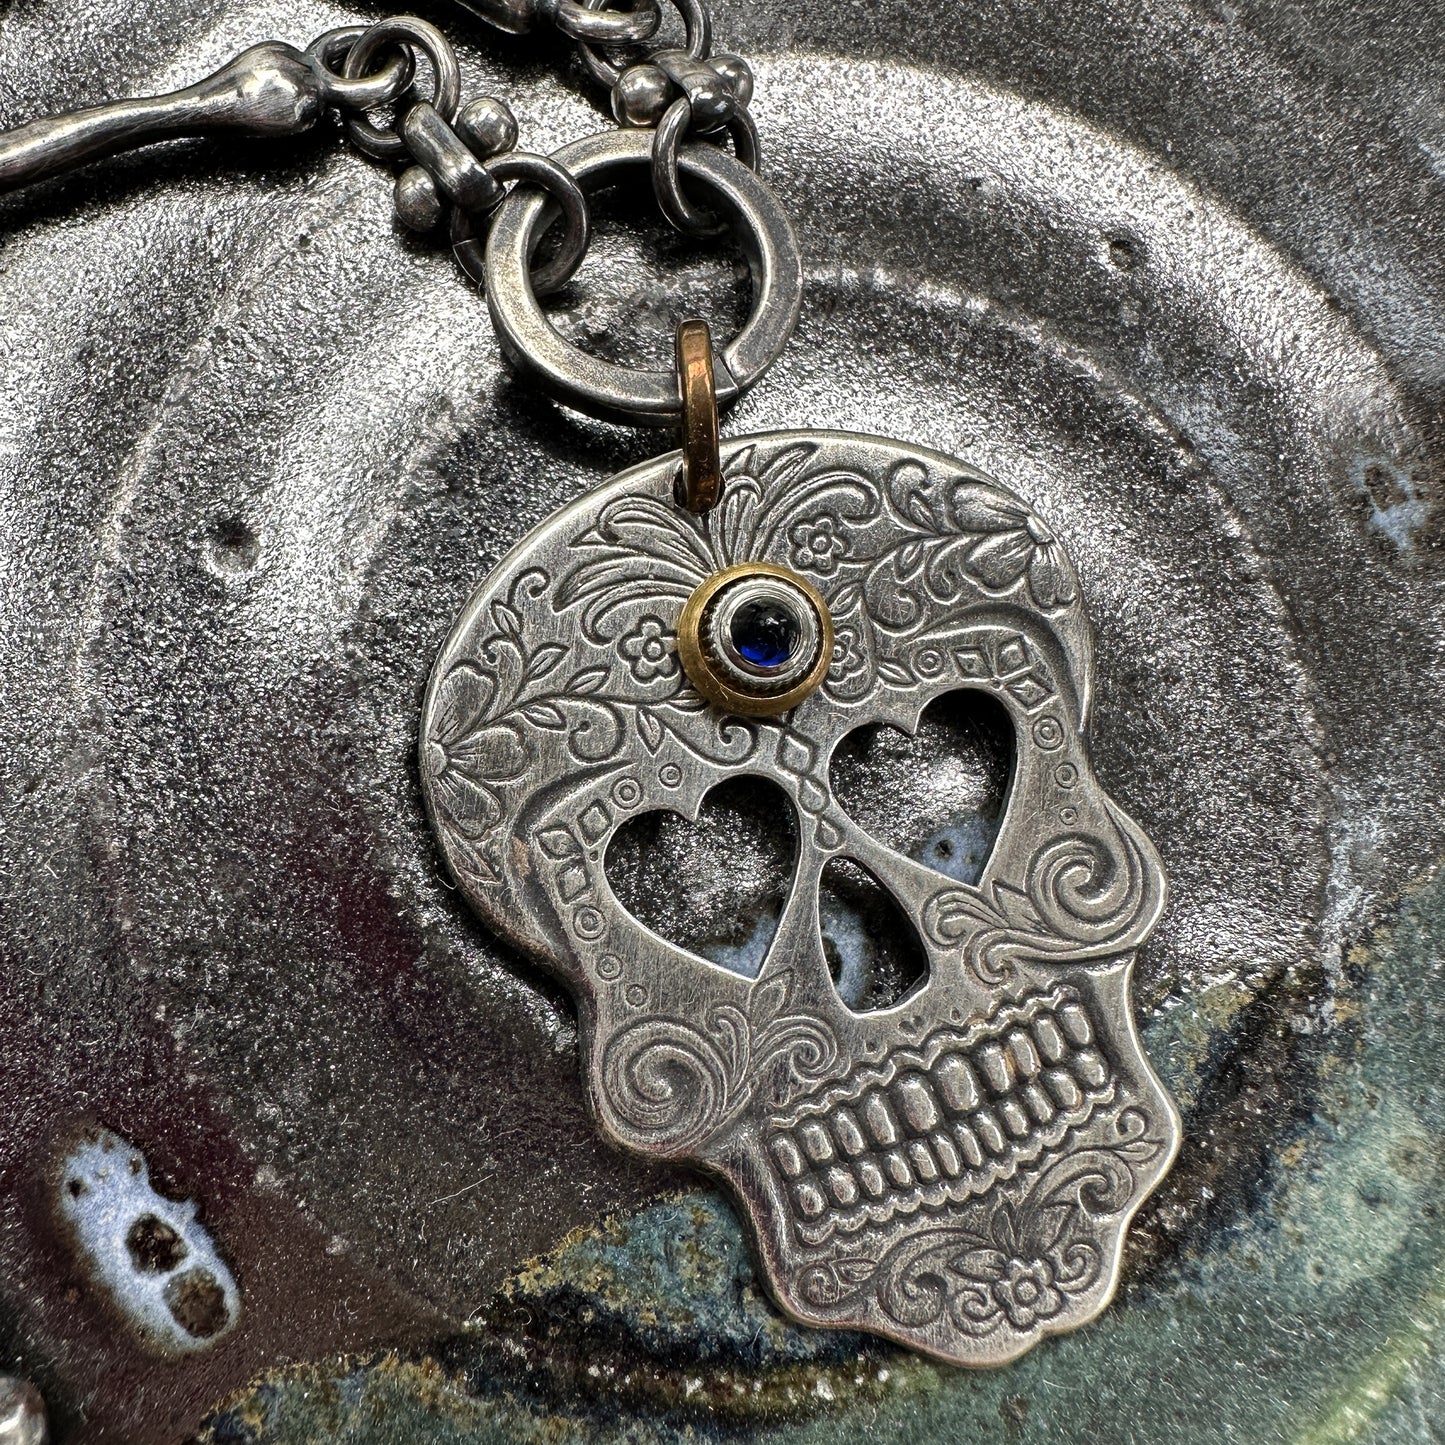 33" Sugar Skull Drop Mixed Metal Necklace - 1 pc.-The Bead Gallery Honolulu